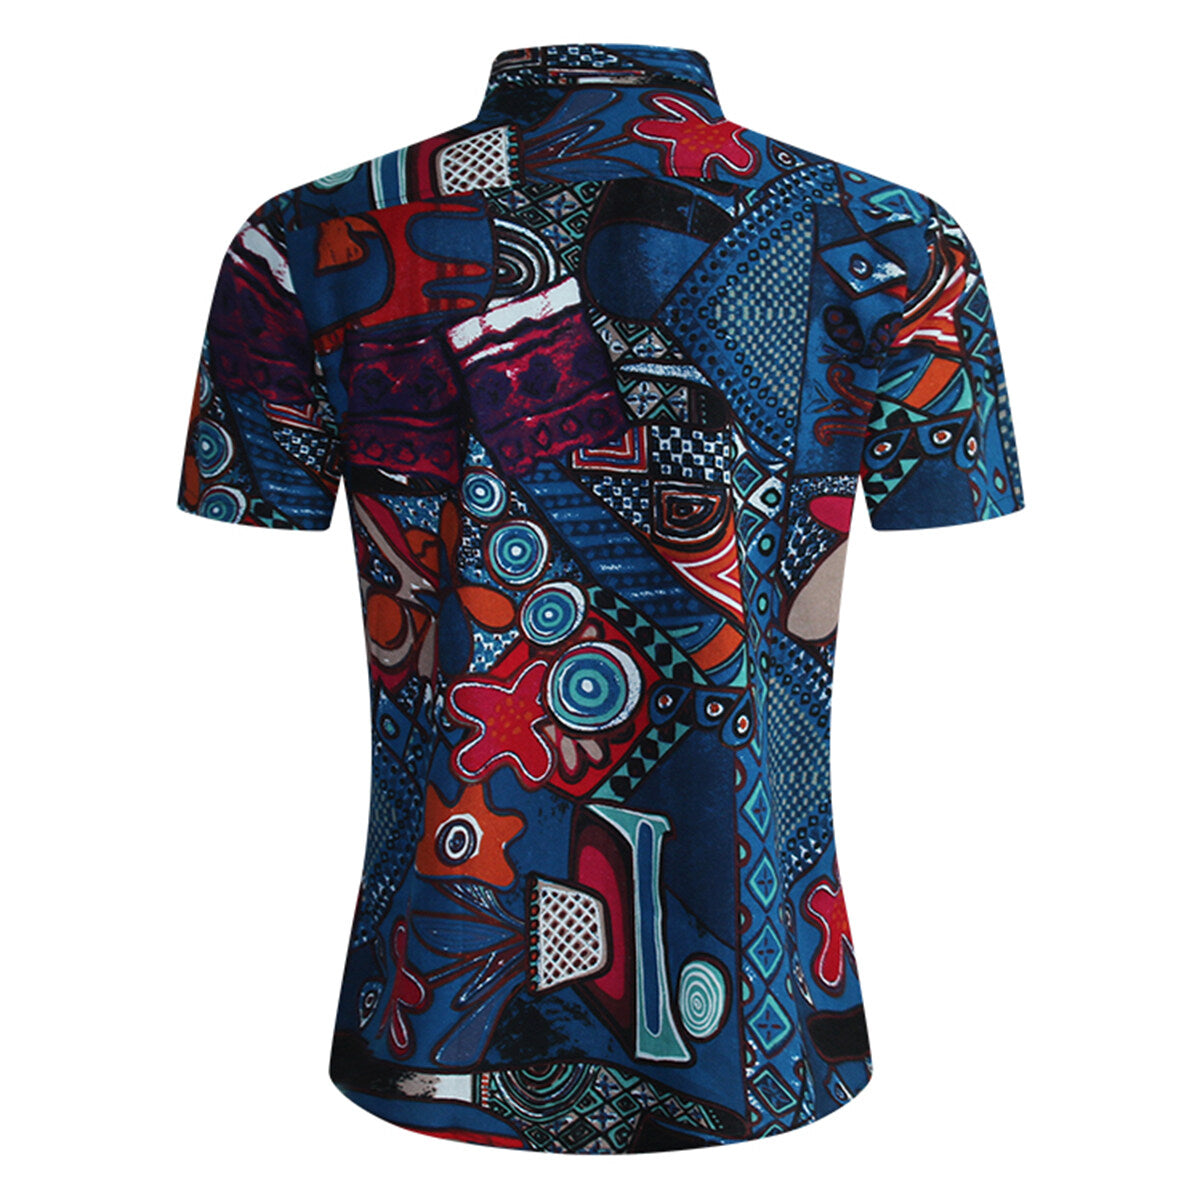 Stylish Men's Floral Print Collar Short Sleeve Shirt Blue